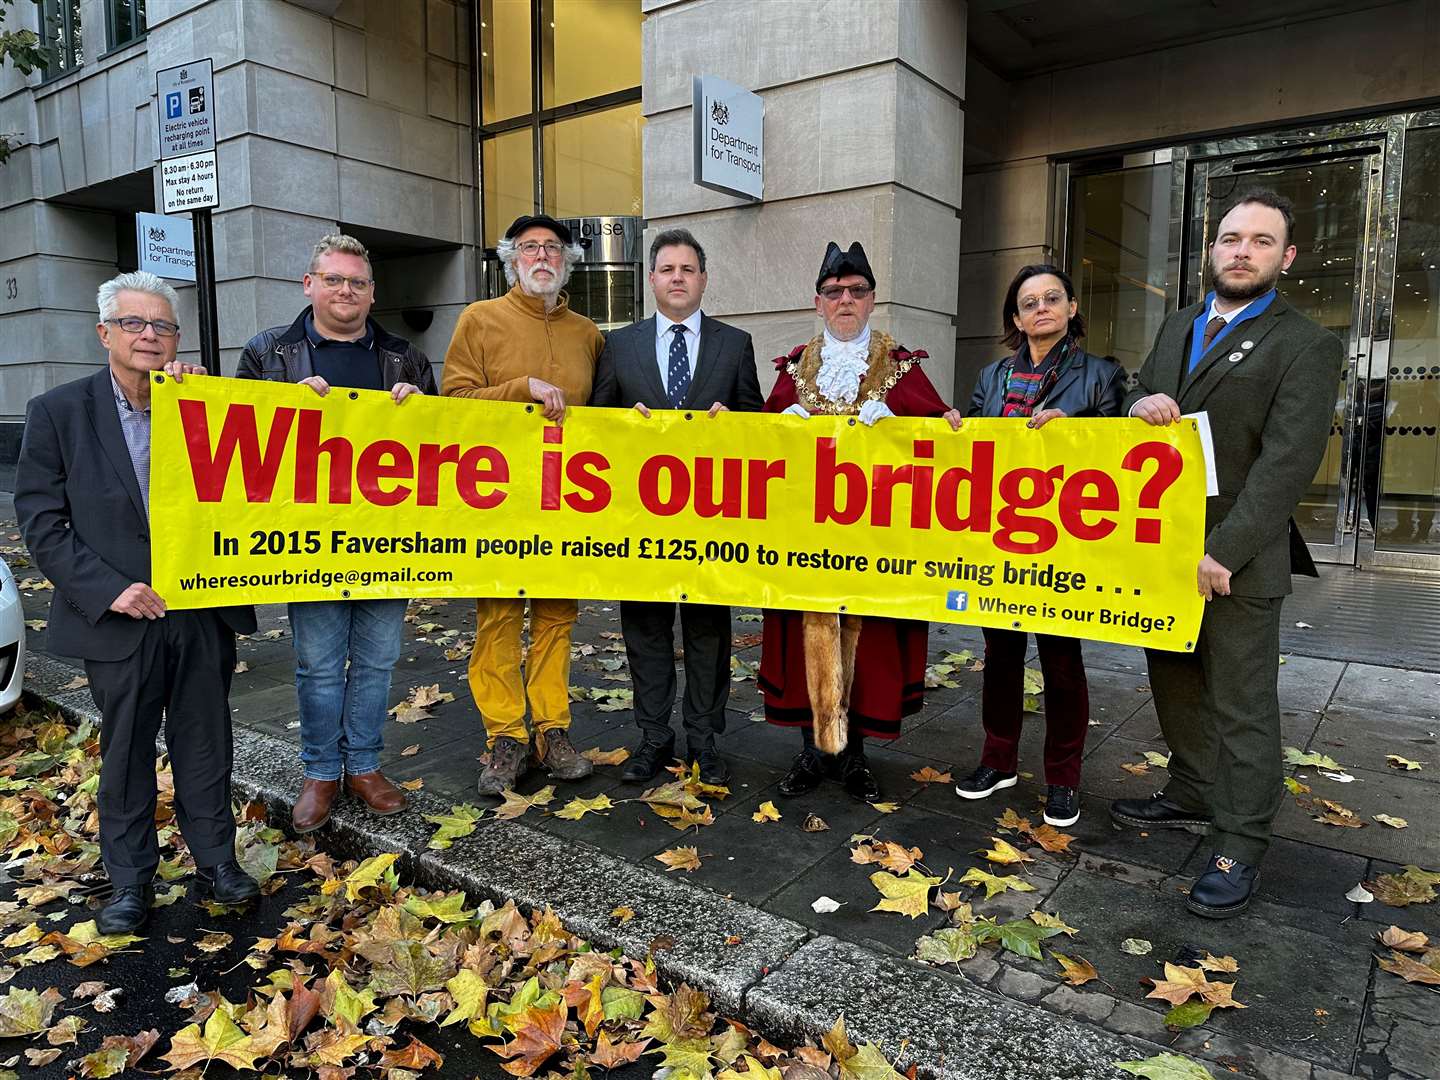 Faversham Creek is the subject of a long-running saga, as residents demand the return of their swing bridge